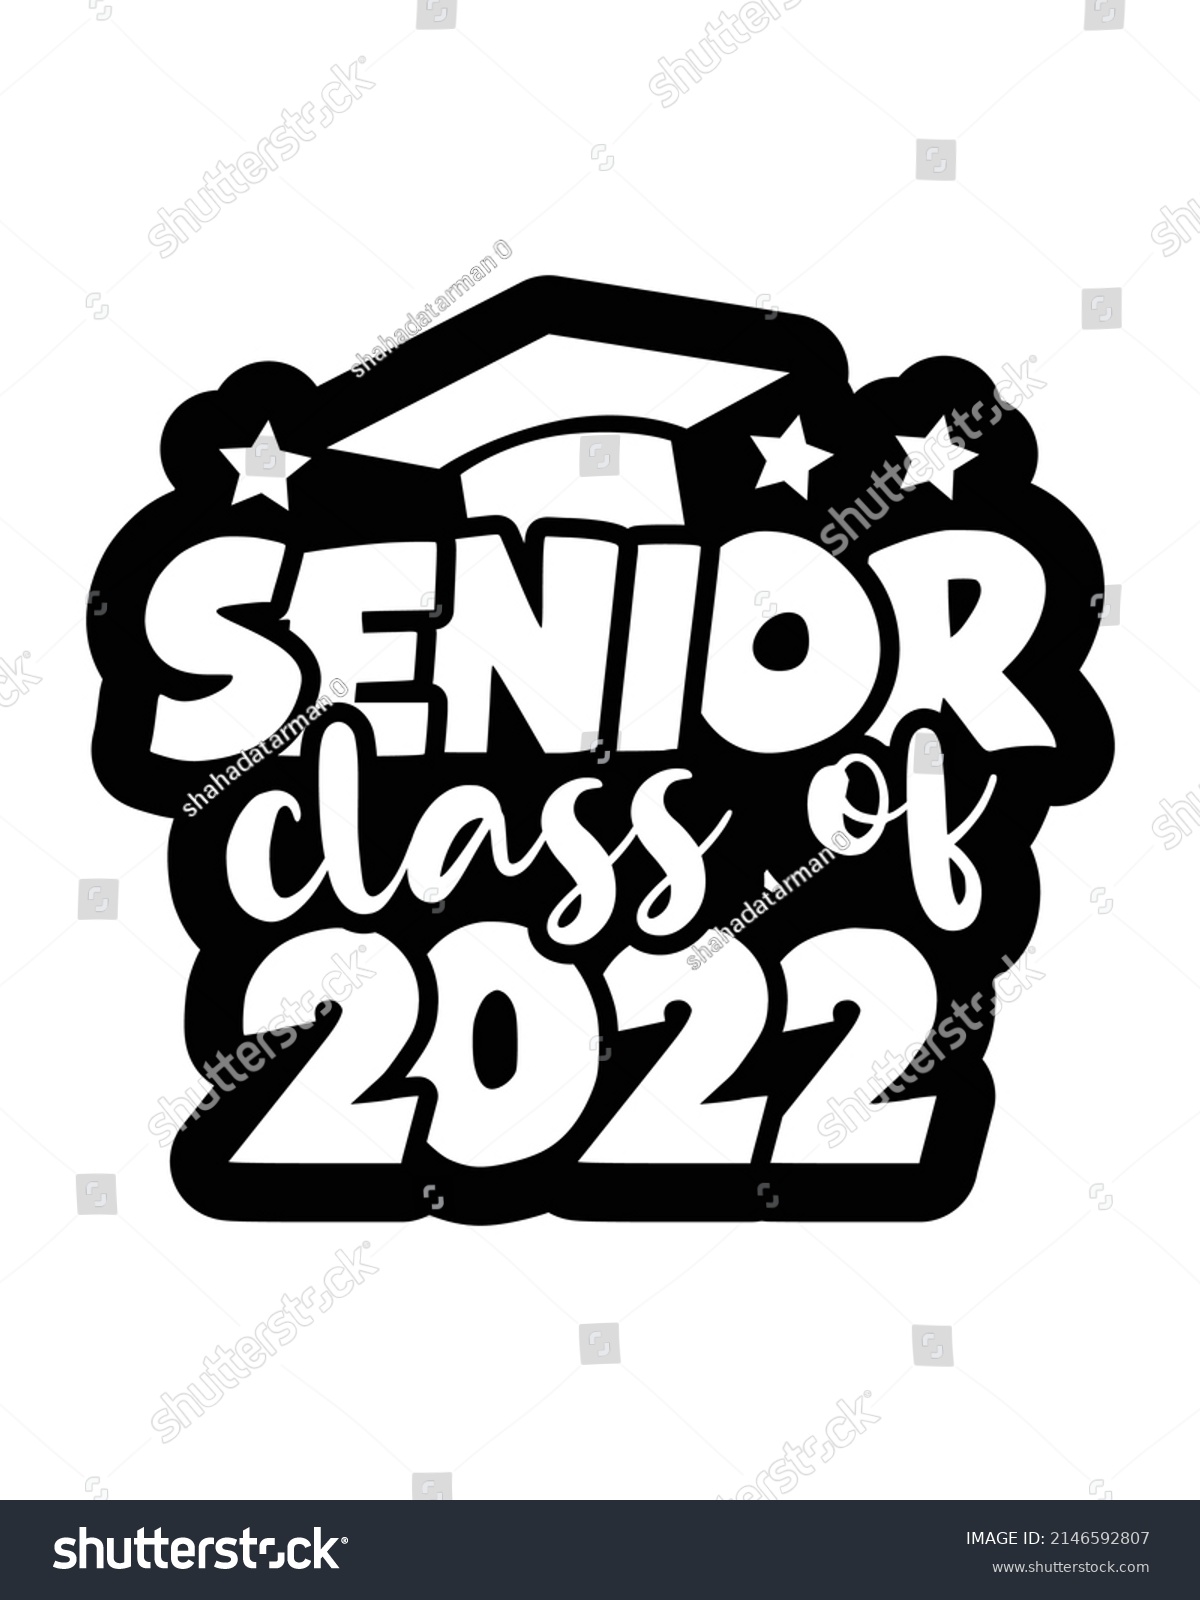 SVG of senior class of 2022, Graduation t-shirt design. svg